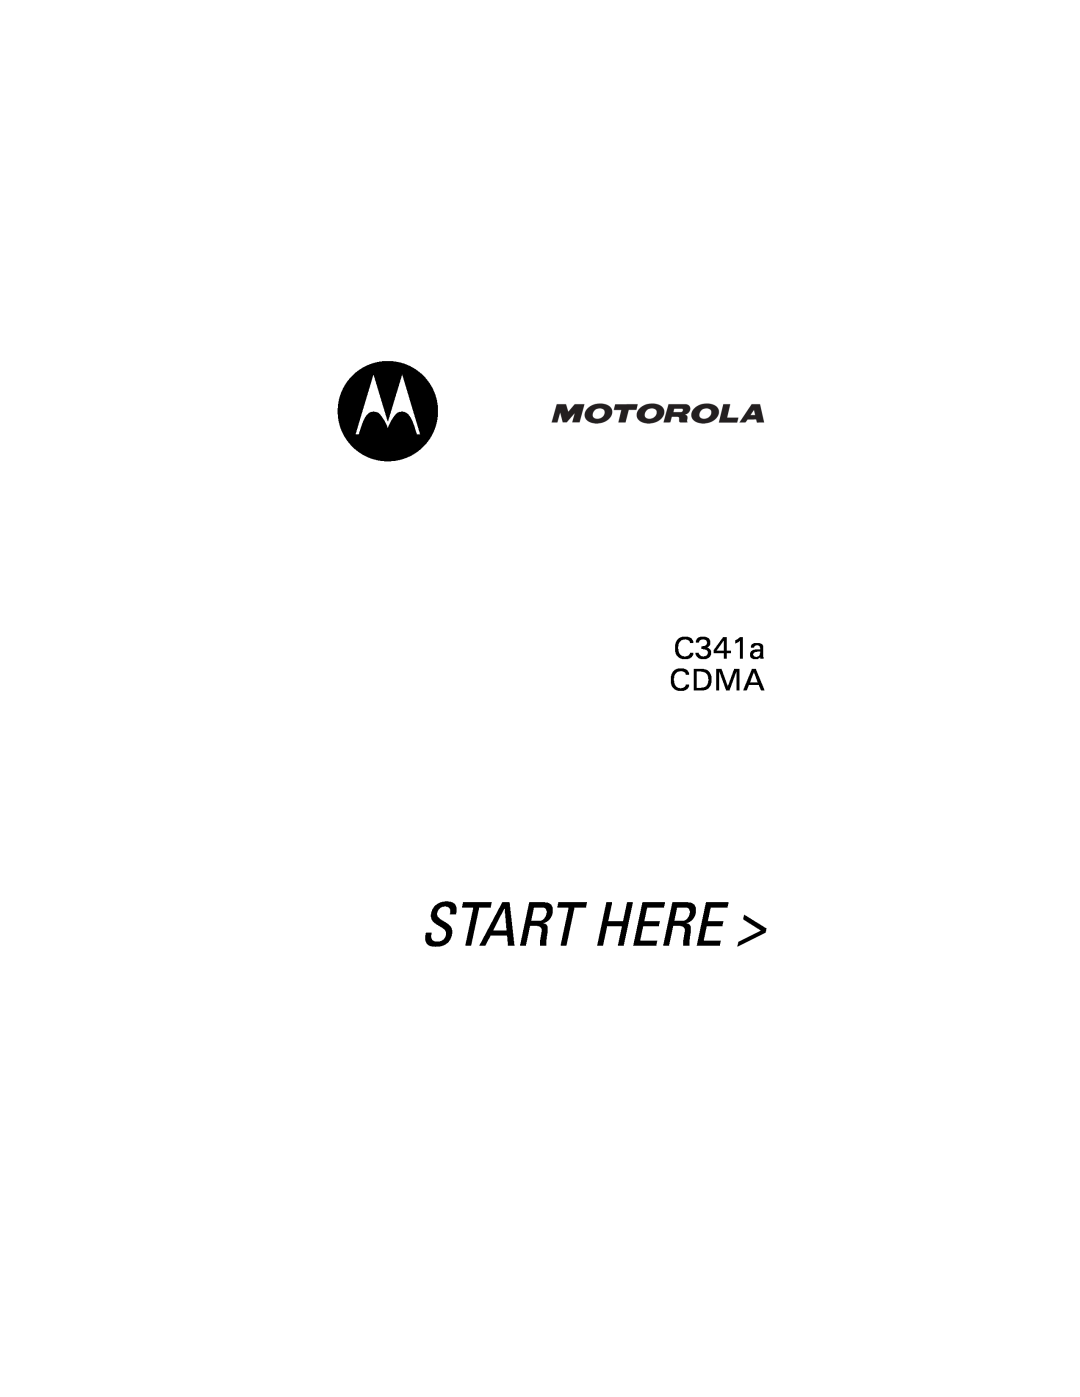 Motorola manual Start Here, C341a CDMA 